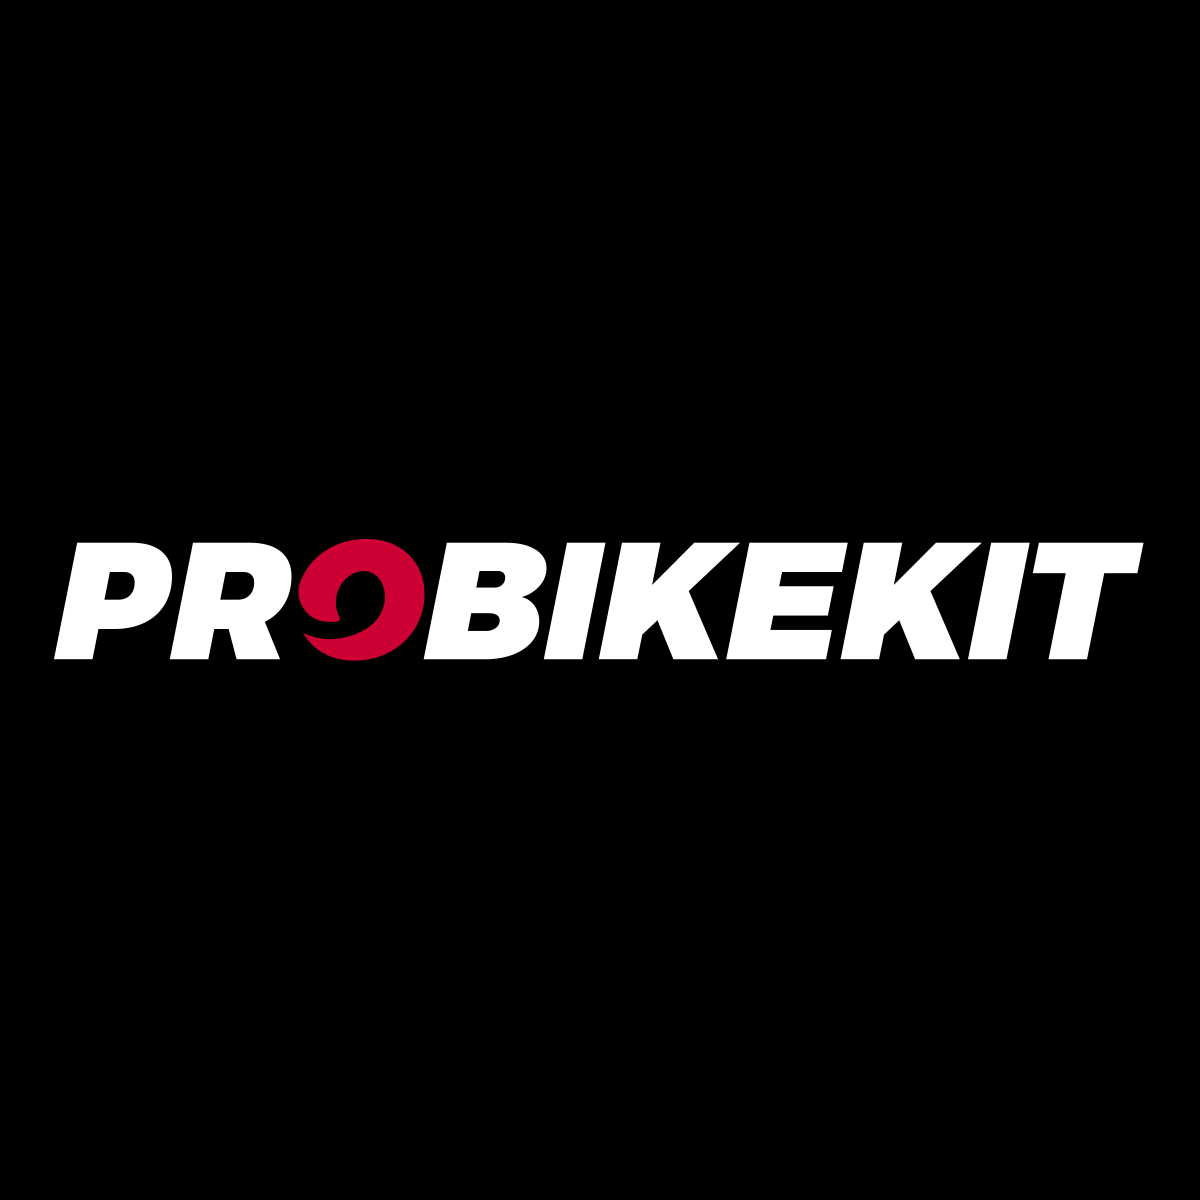 probikekit cycle to work